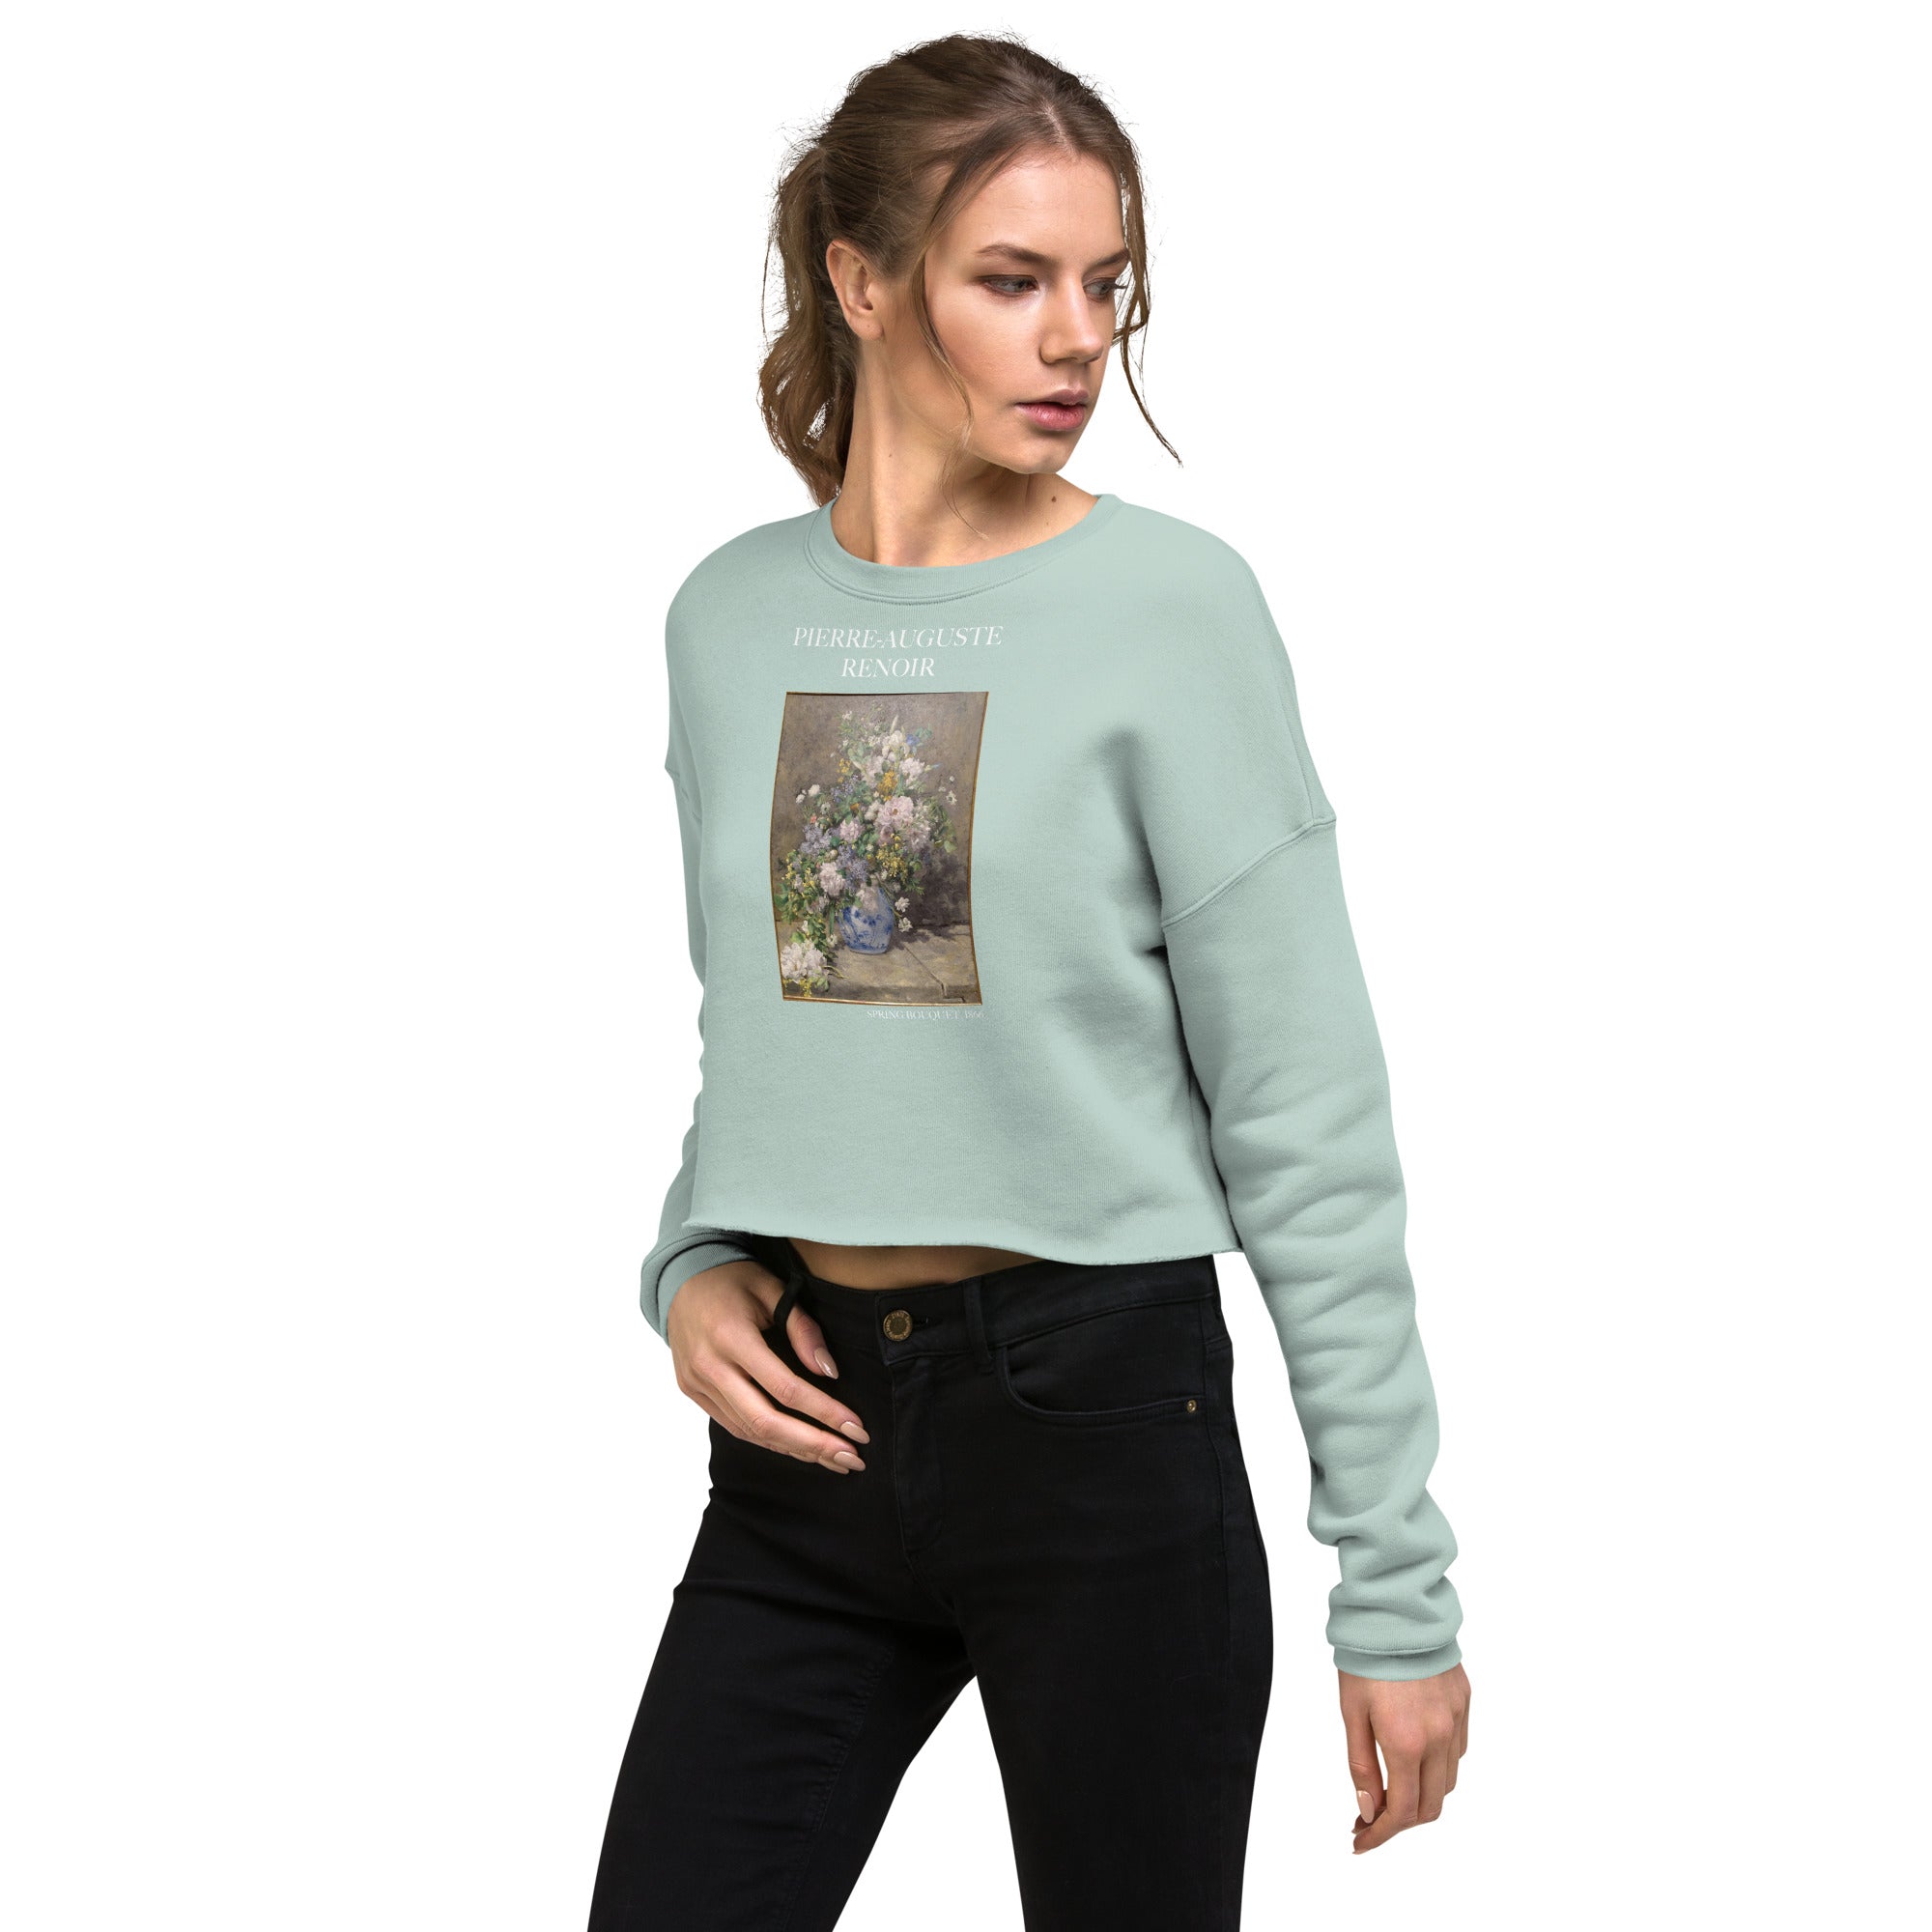 Pierre-Auguste Renoir 'Spring Bouquet' Famous Painting Cropped Sweatshirt | Premium Art Cropped Sweatshirt